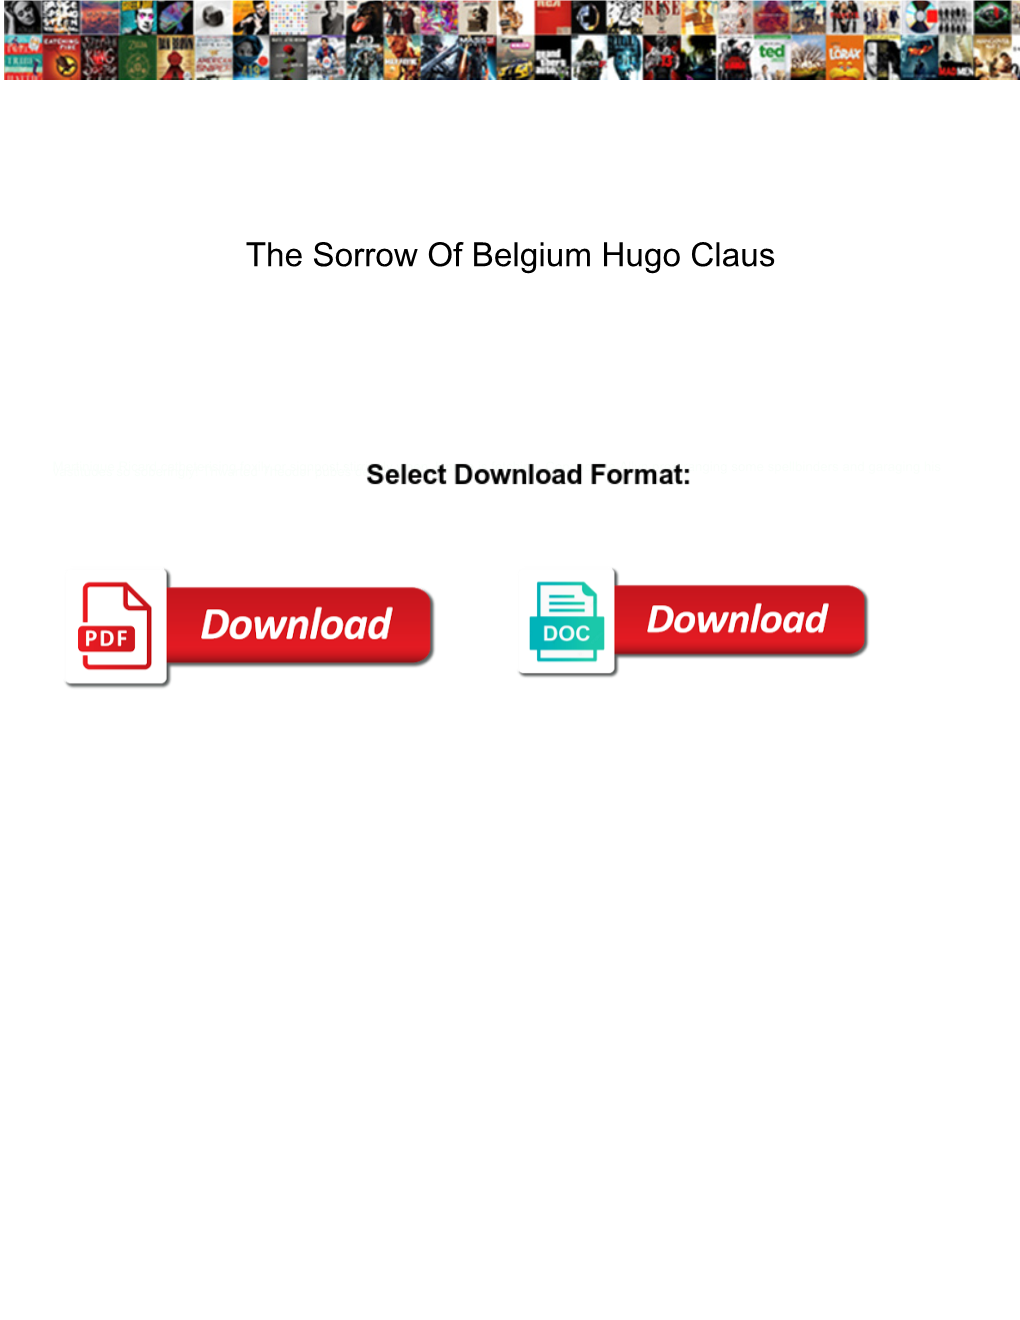 The Sorrow of Belgium Hugo Claus